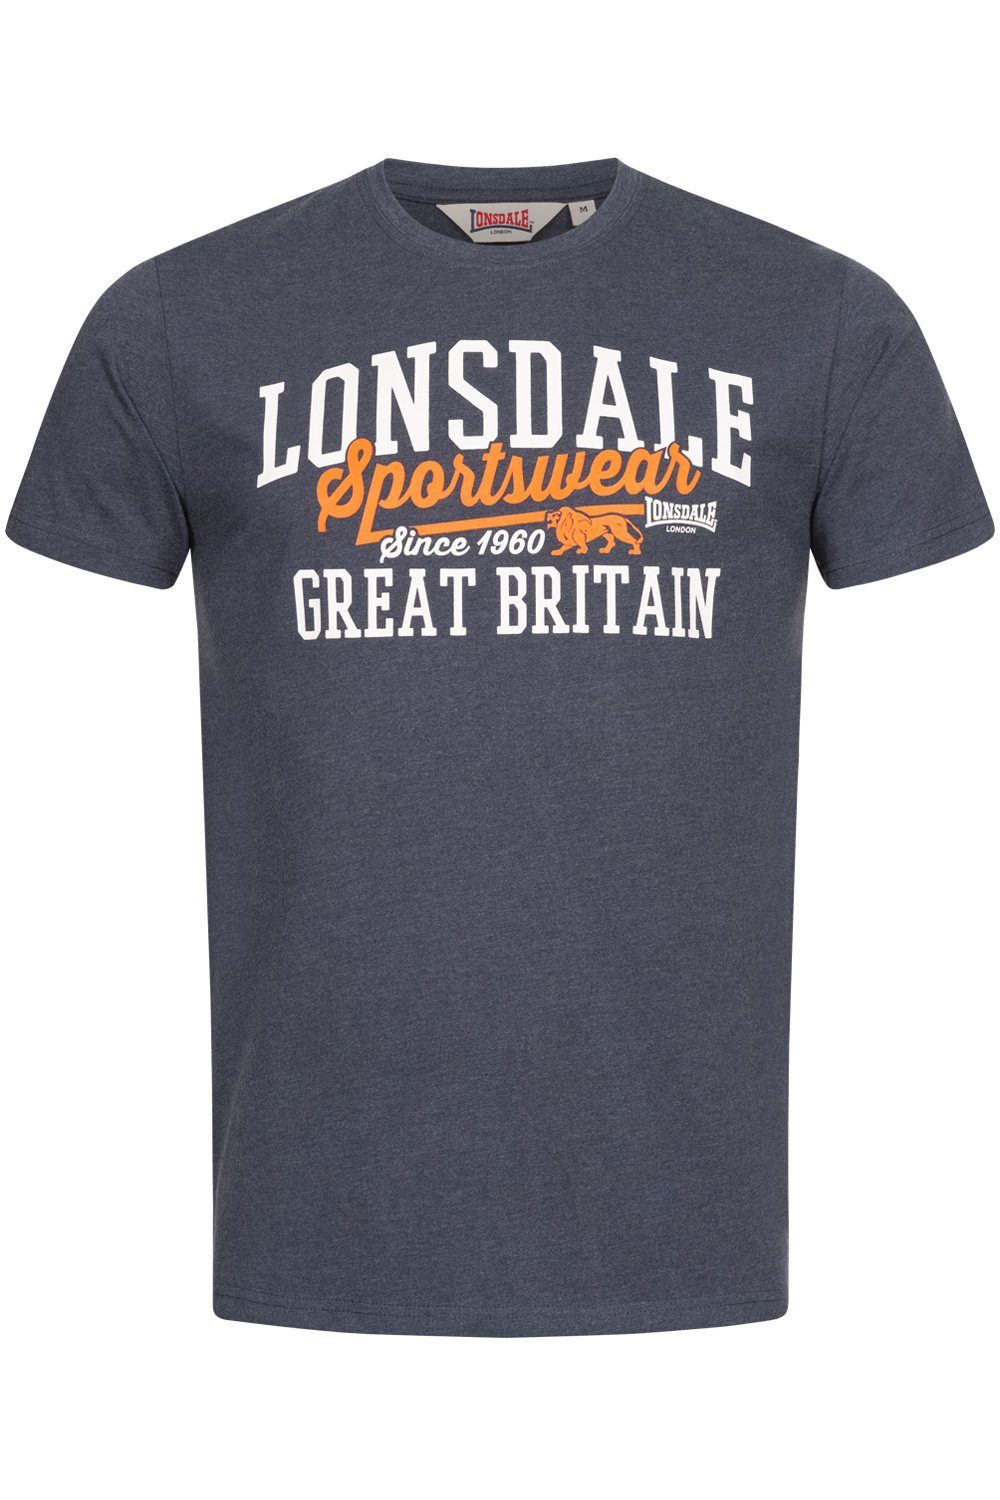 T-Shirt marl Lonsdale Adult Herren navy/orange/white Lonsdale Dervaig T-Shirt